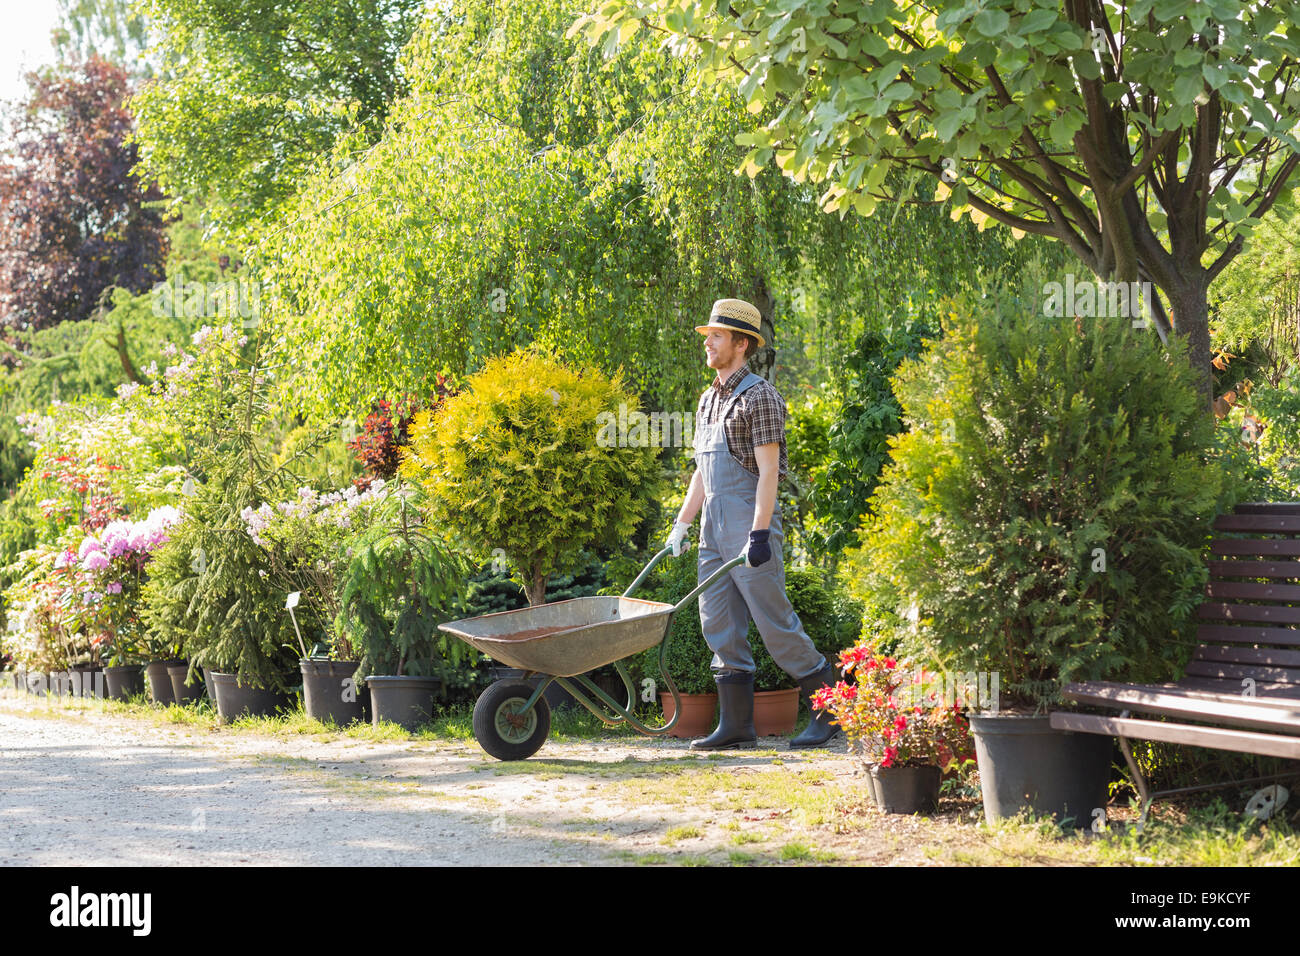 Man pushing wheelbarrow at garden Stock Photo